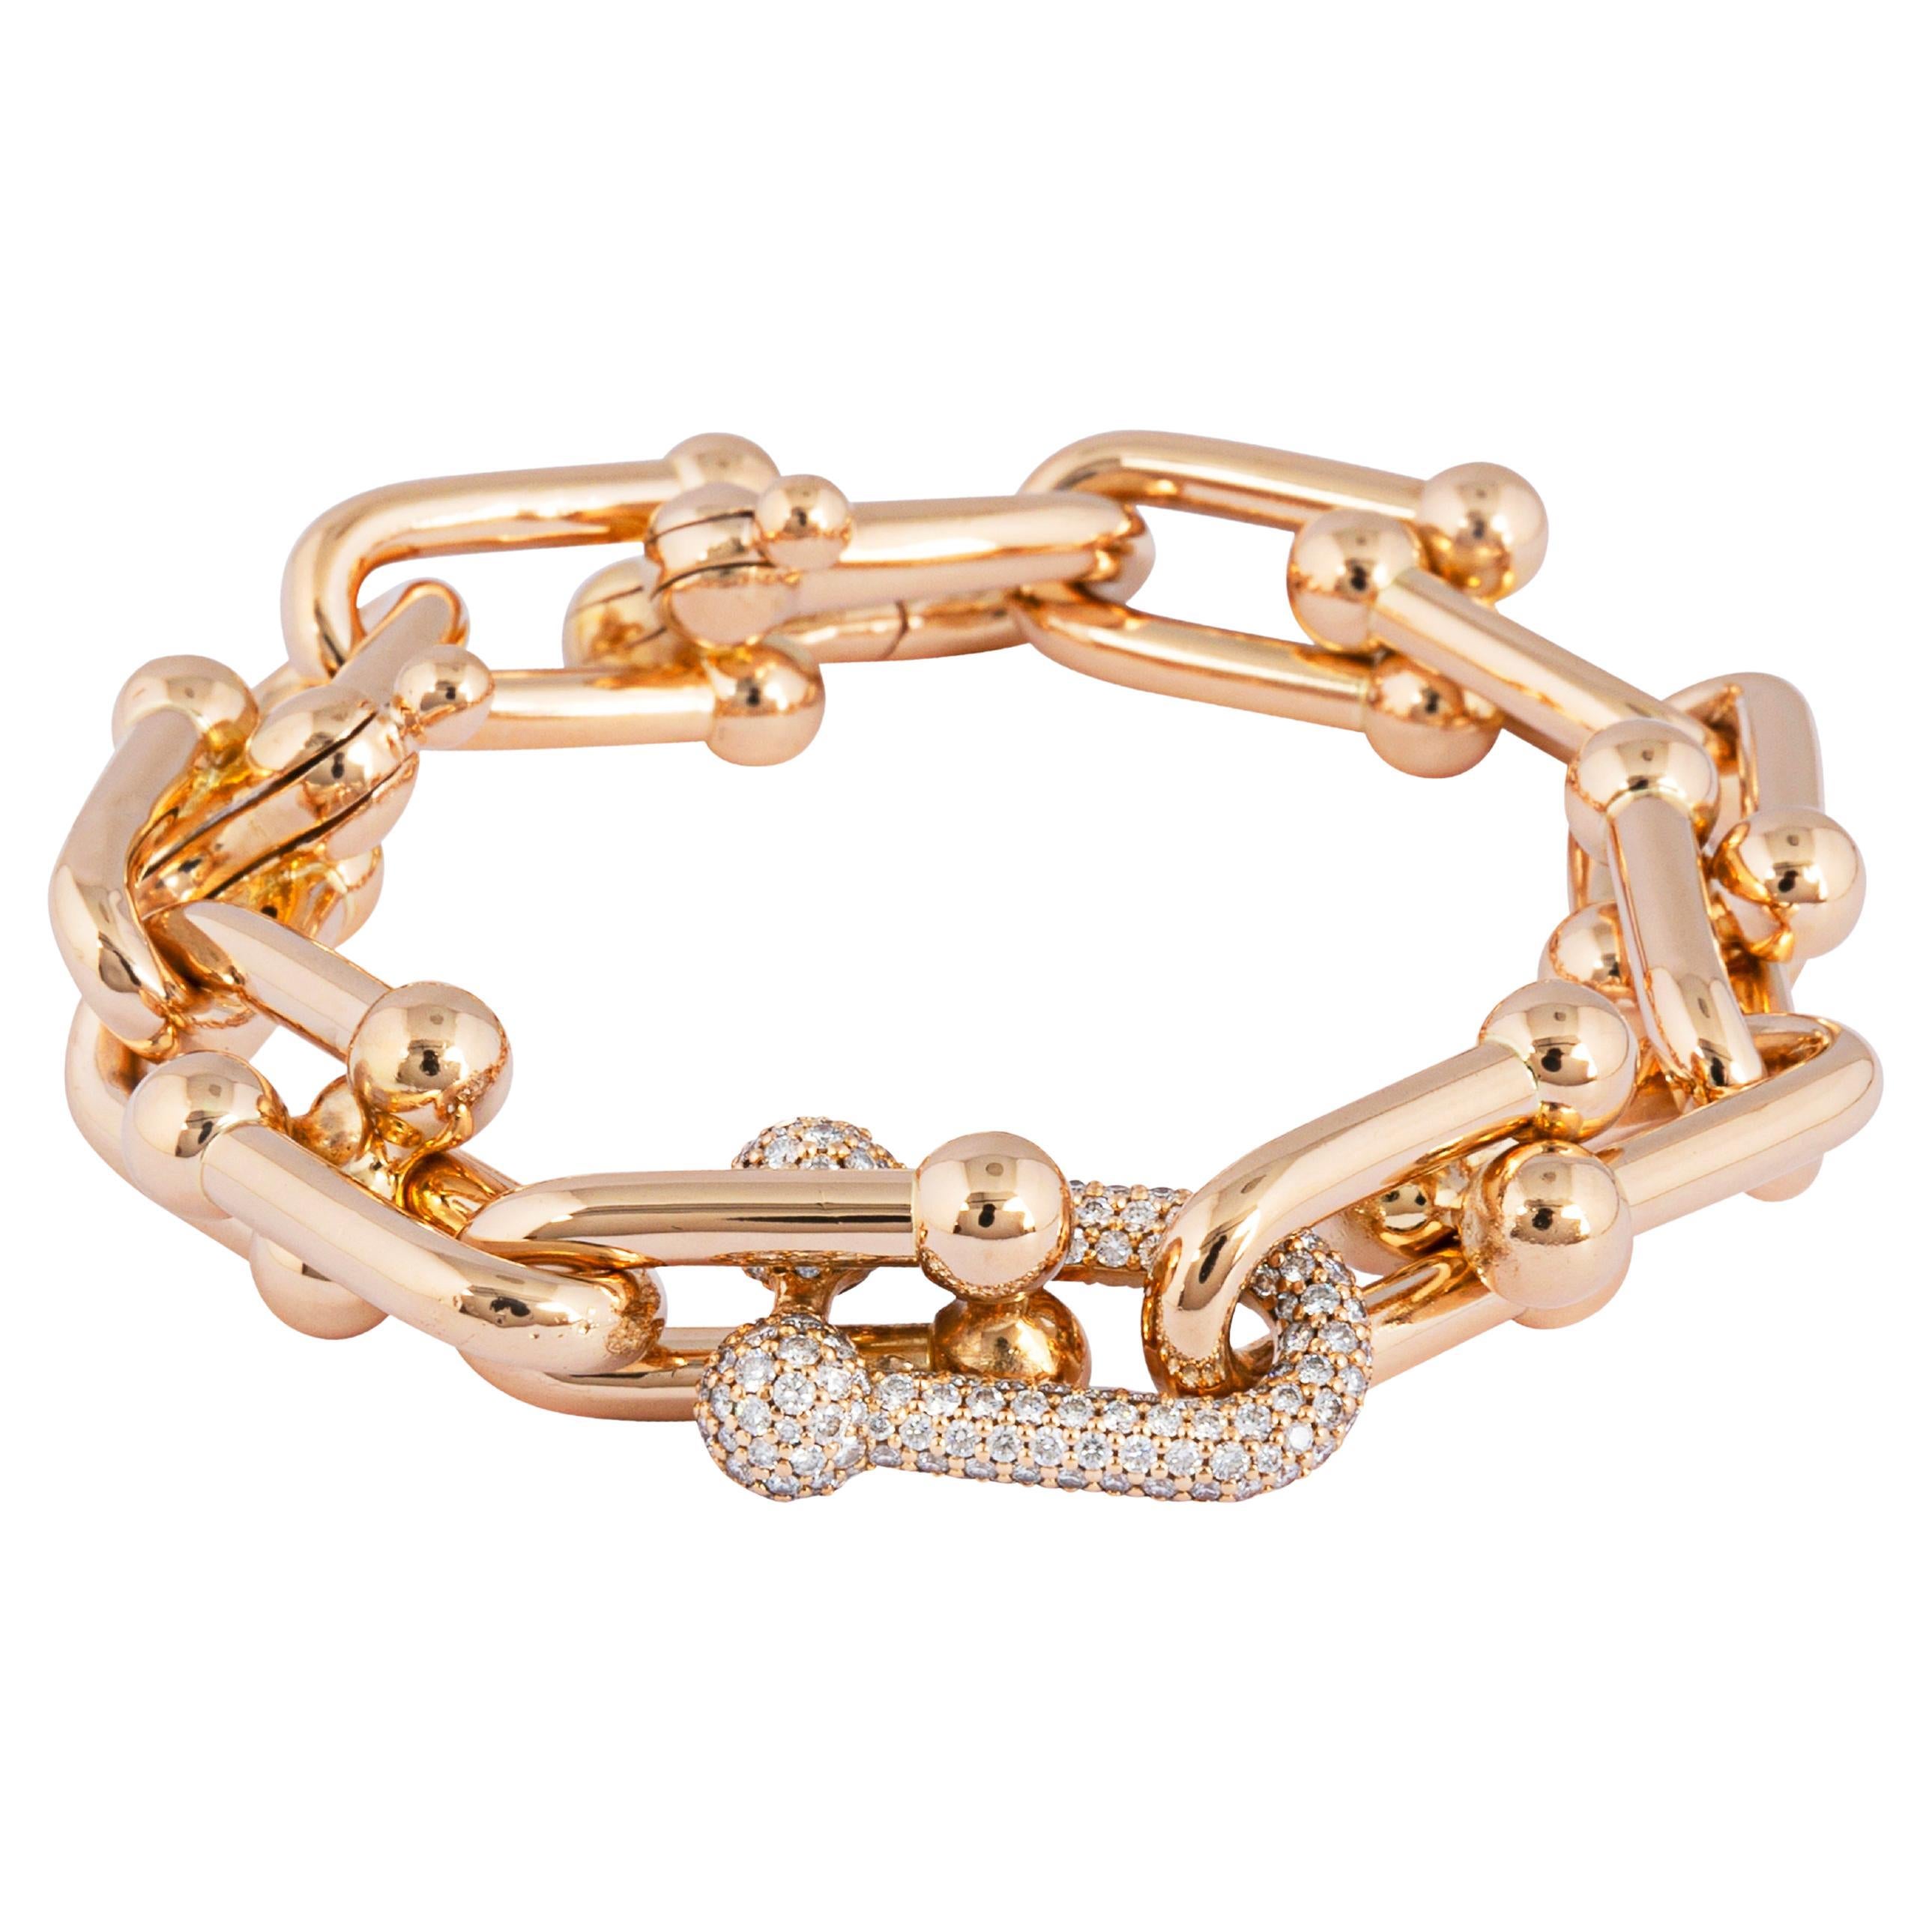 Tiffany & Co. Diamond Set Large Link 'HardWear' Bracelet in 18ct Rose Gold